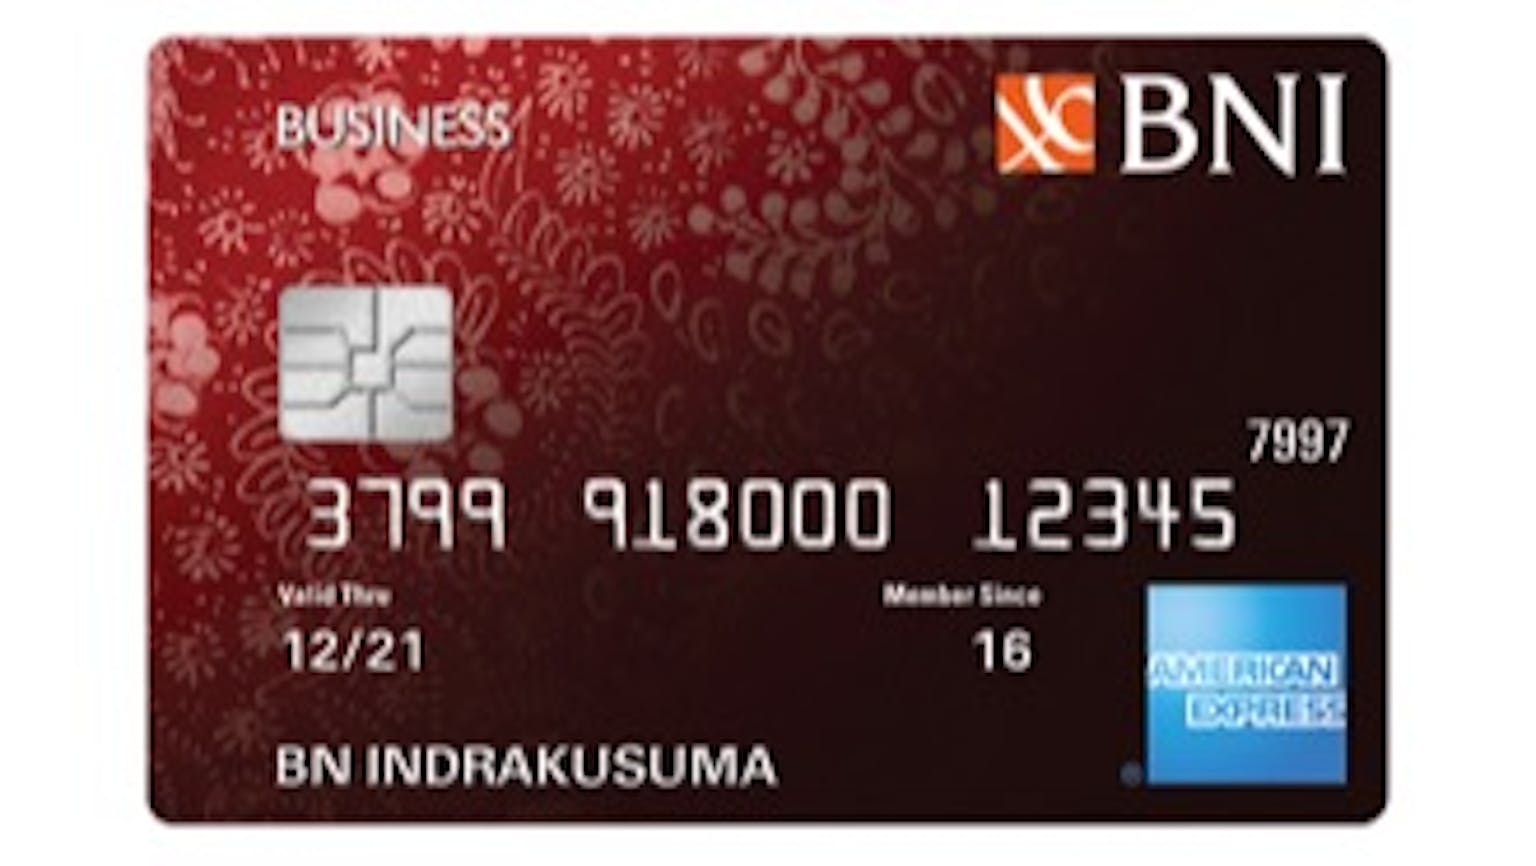 BNI American Express Business Card